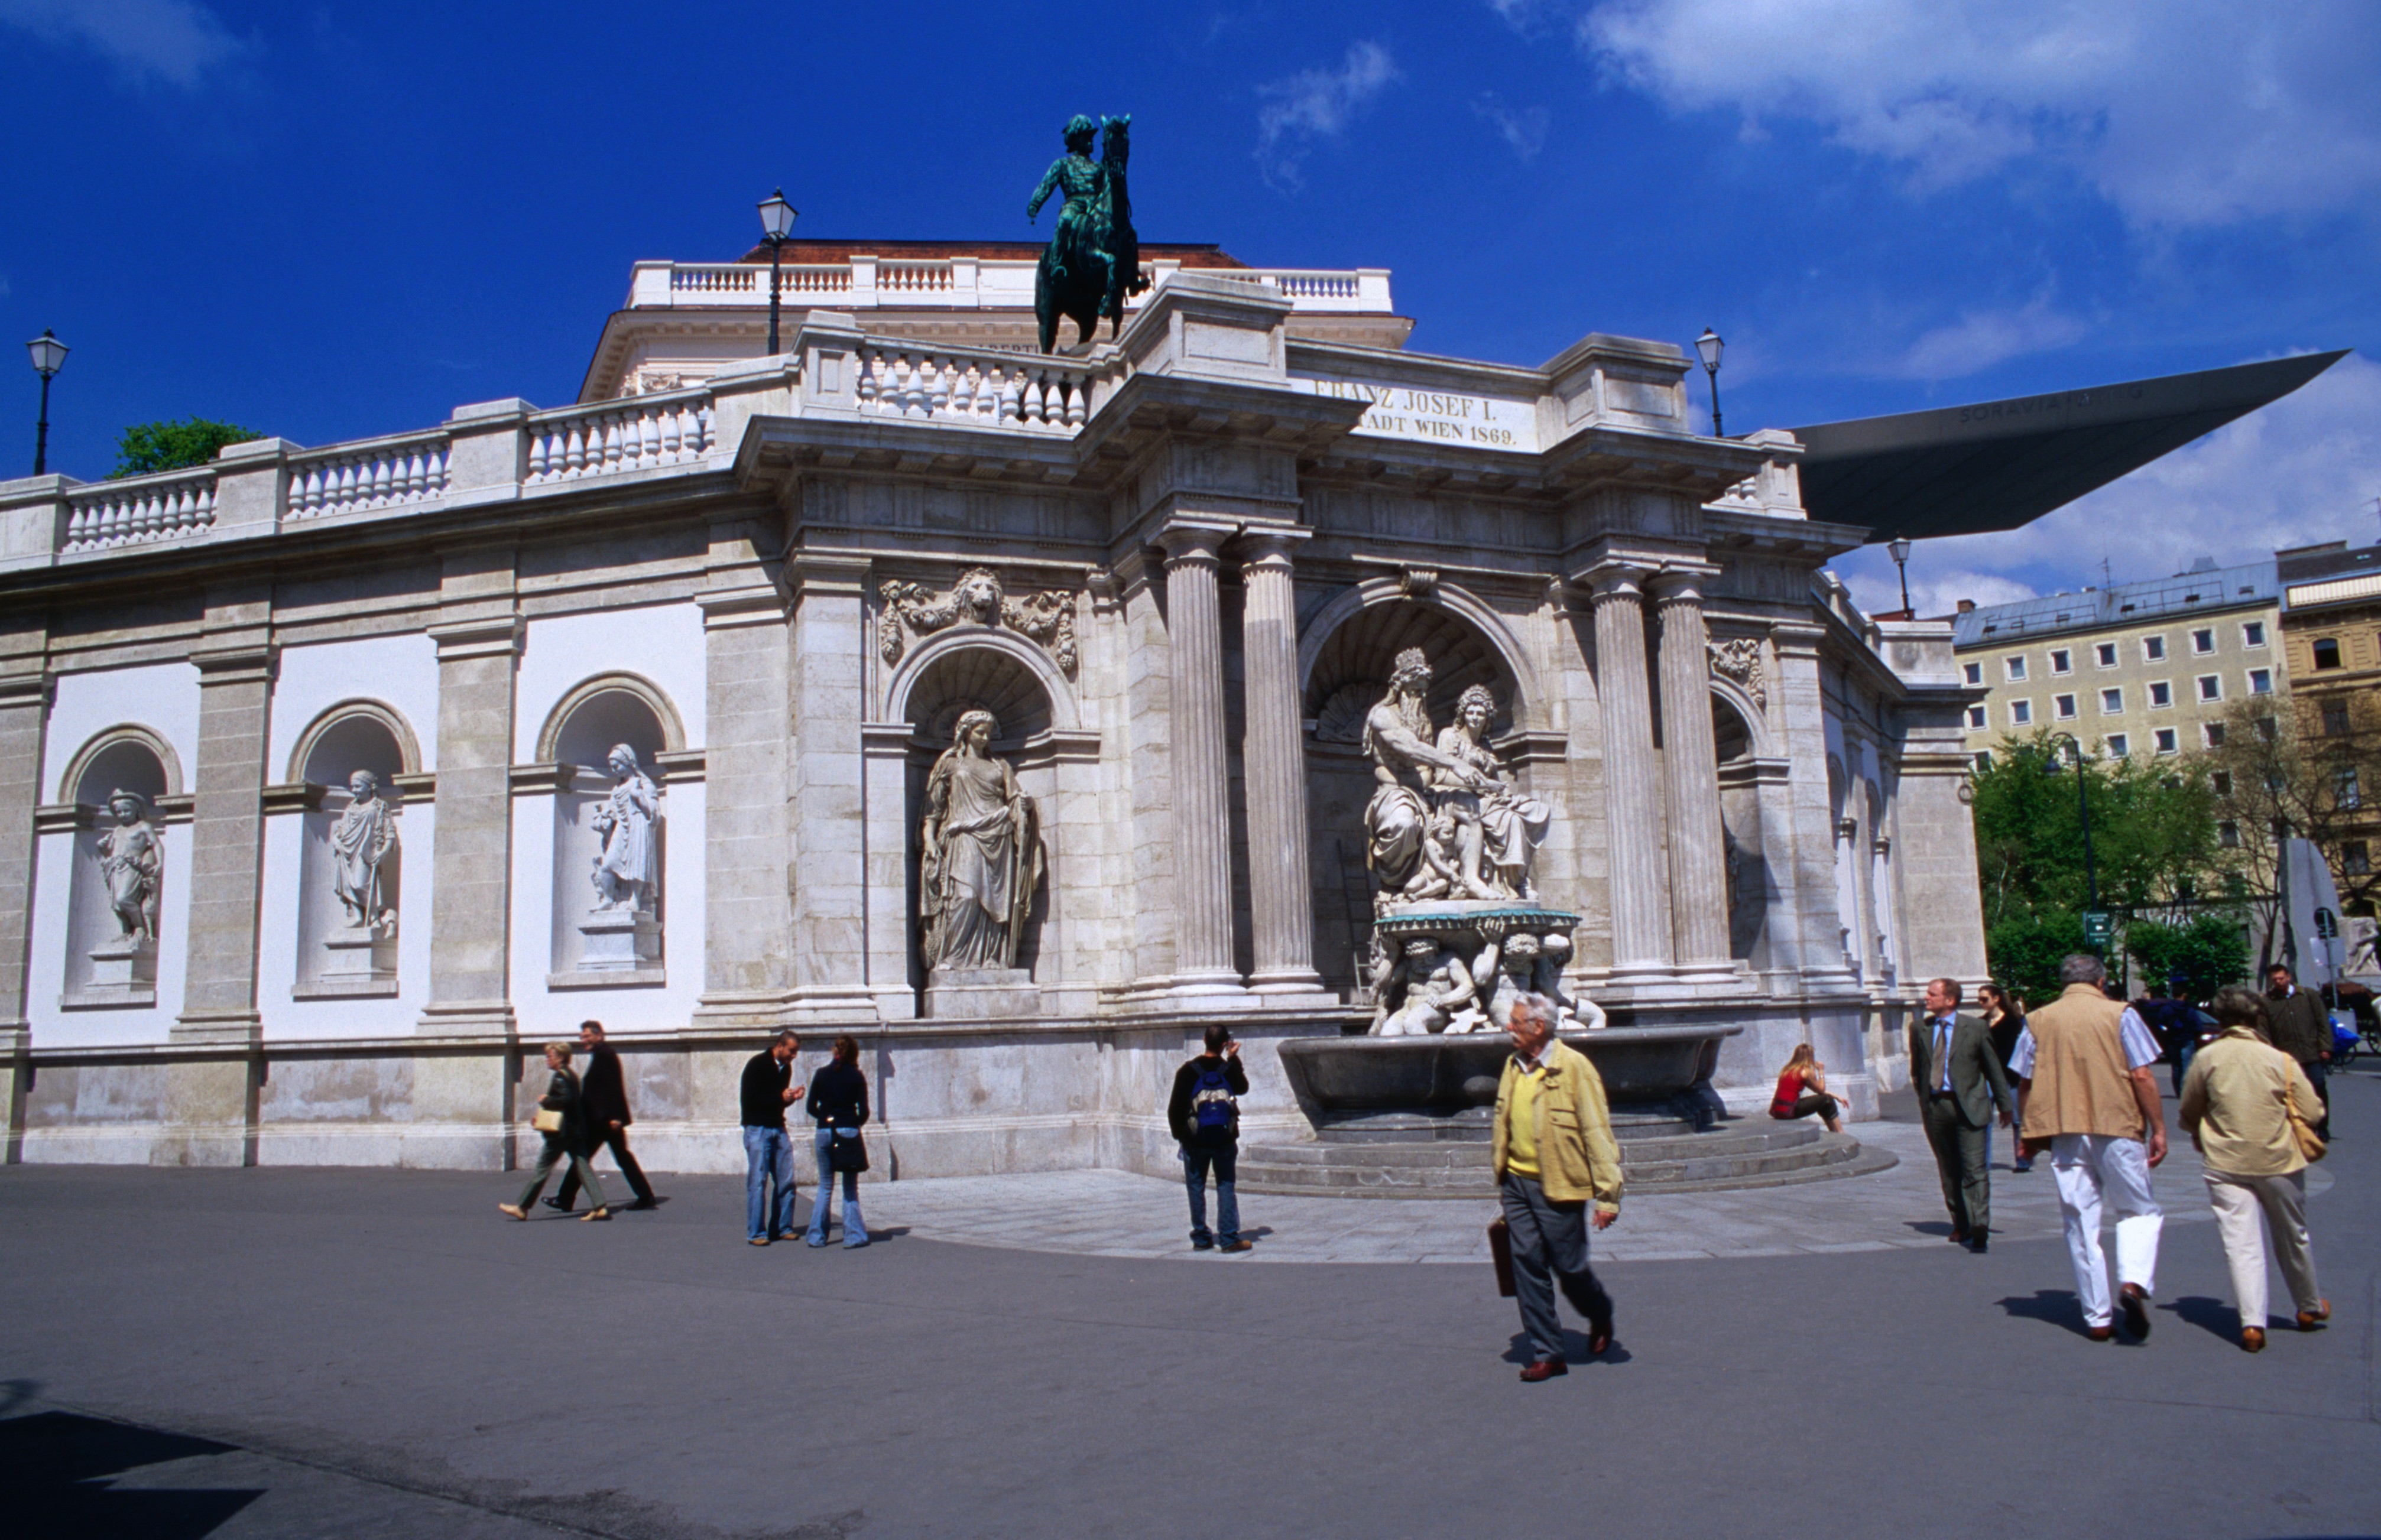 Albertina | Vienna, Austria Attractions - Lonely Planet